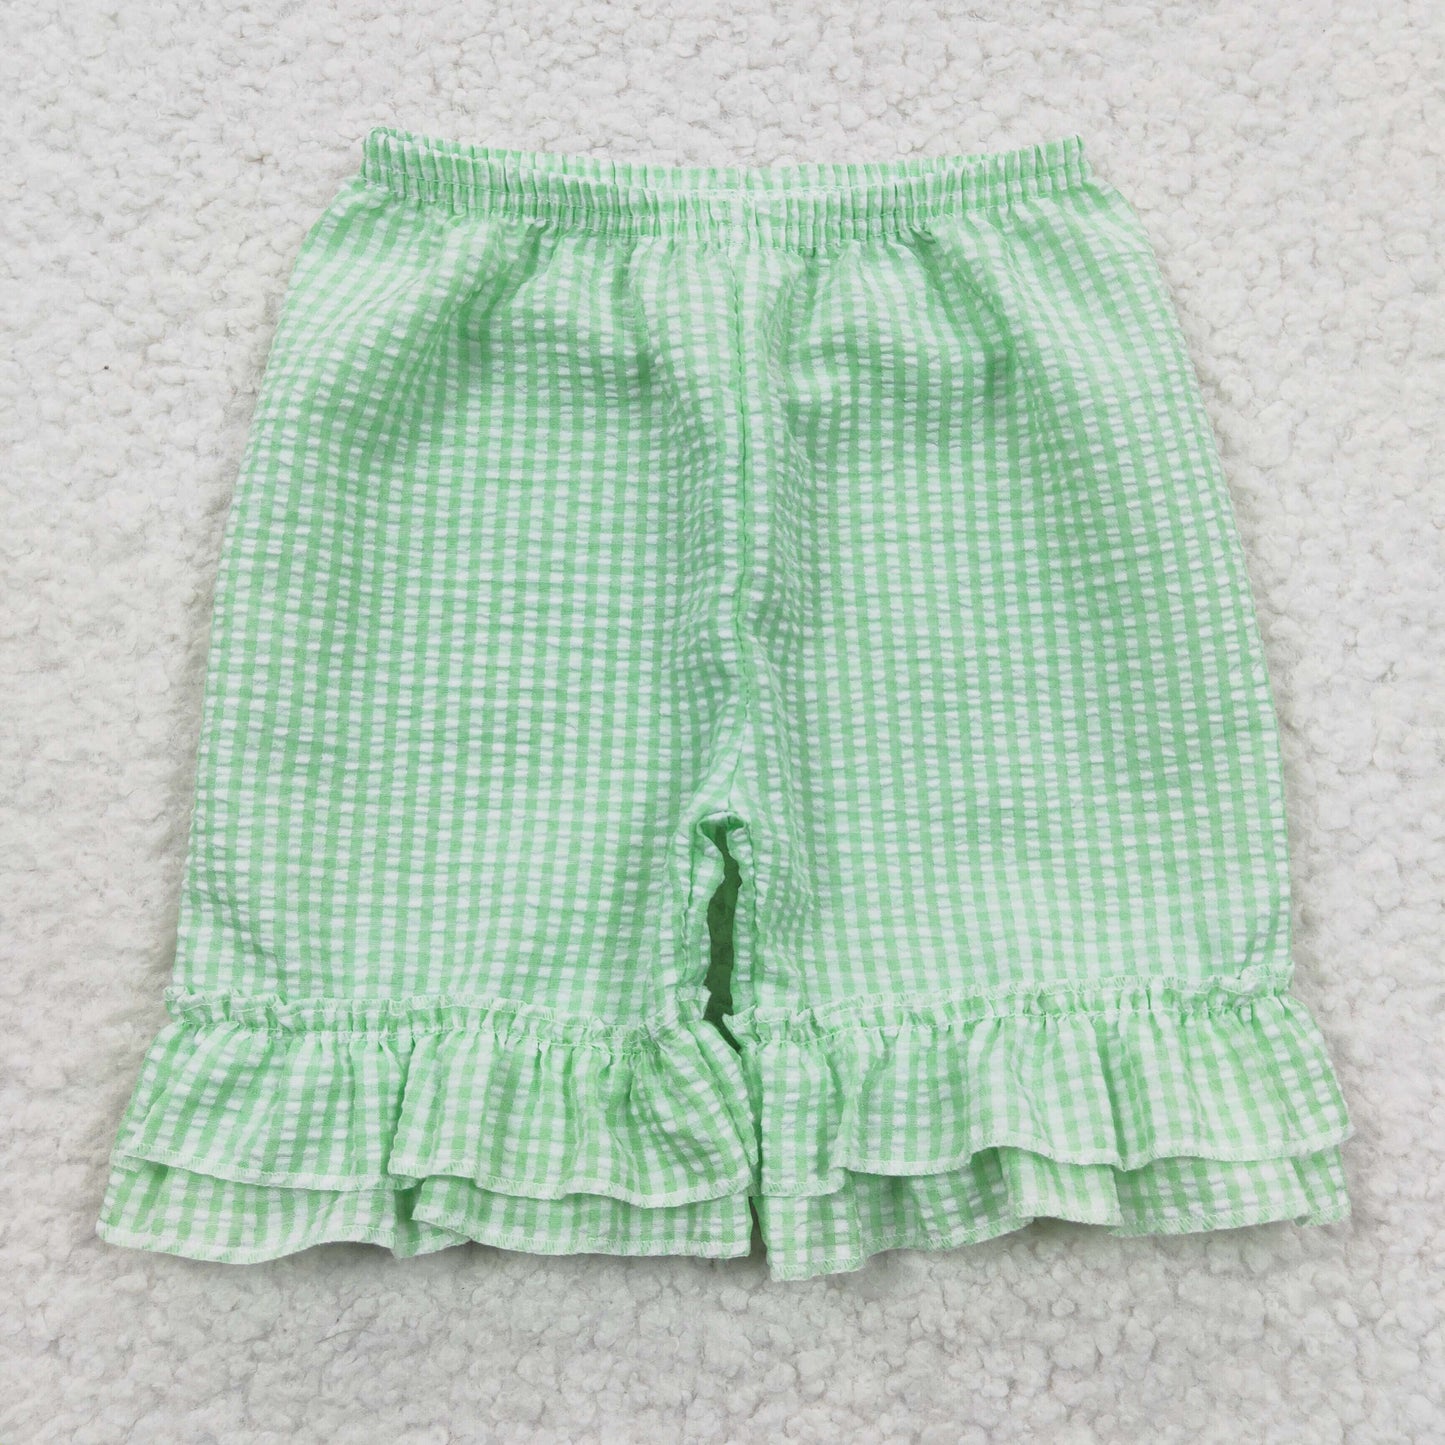 kids clothing green seersucker bottom shorts